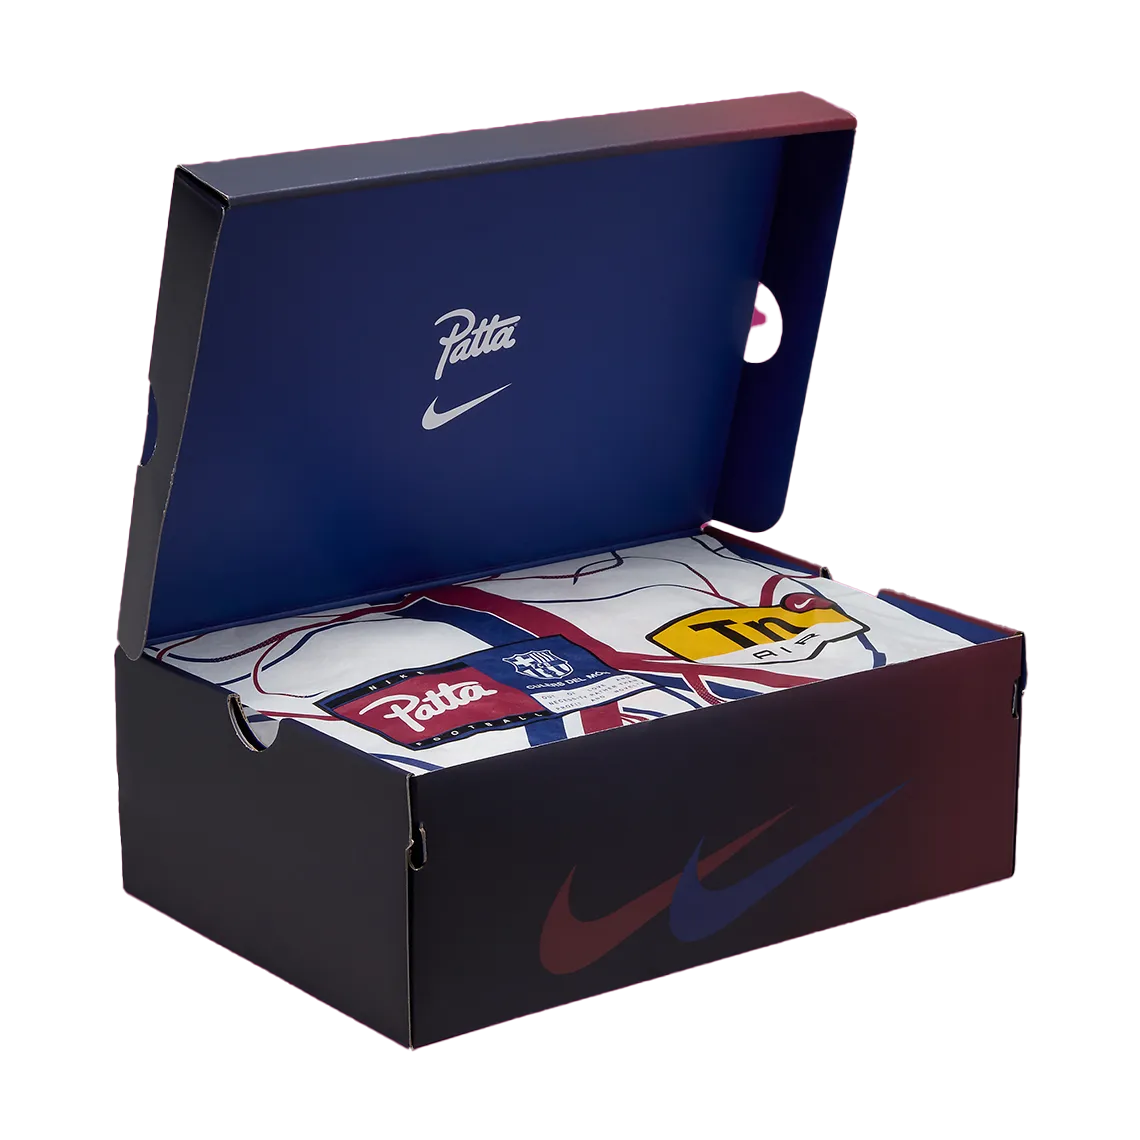 Nike Air Max Tn Plus Patta FC Barcelona Culers del Món